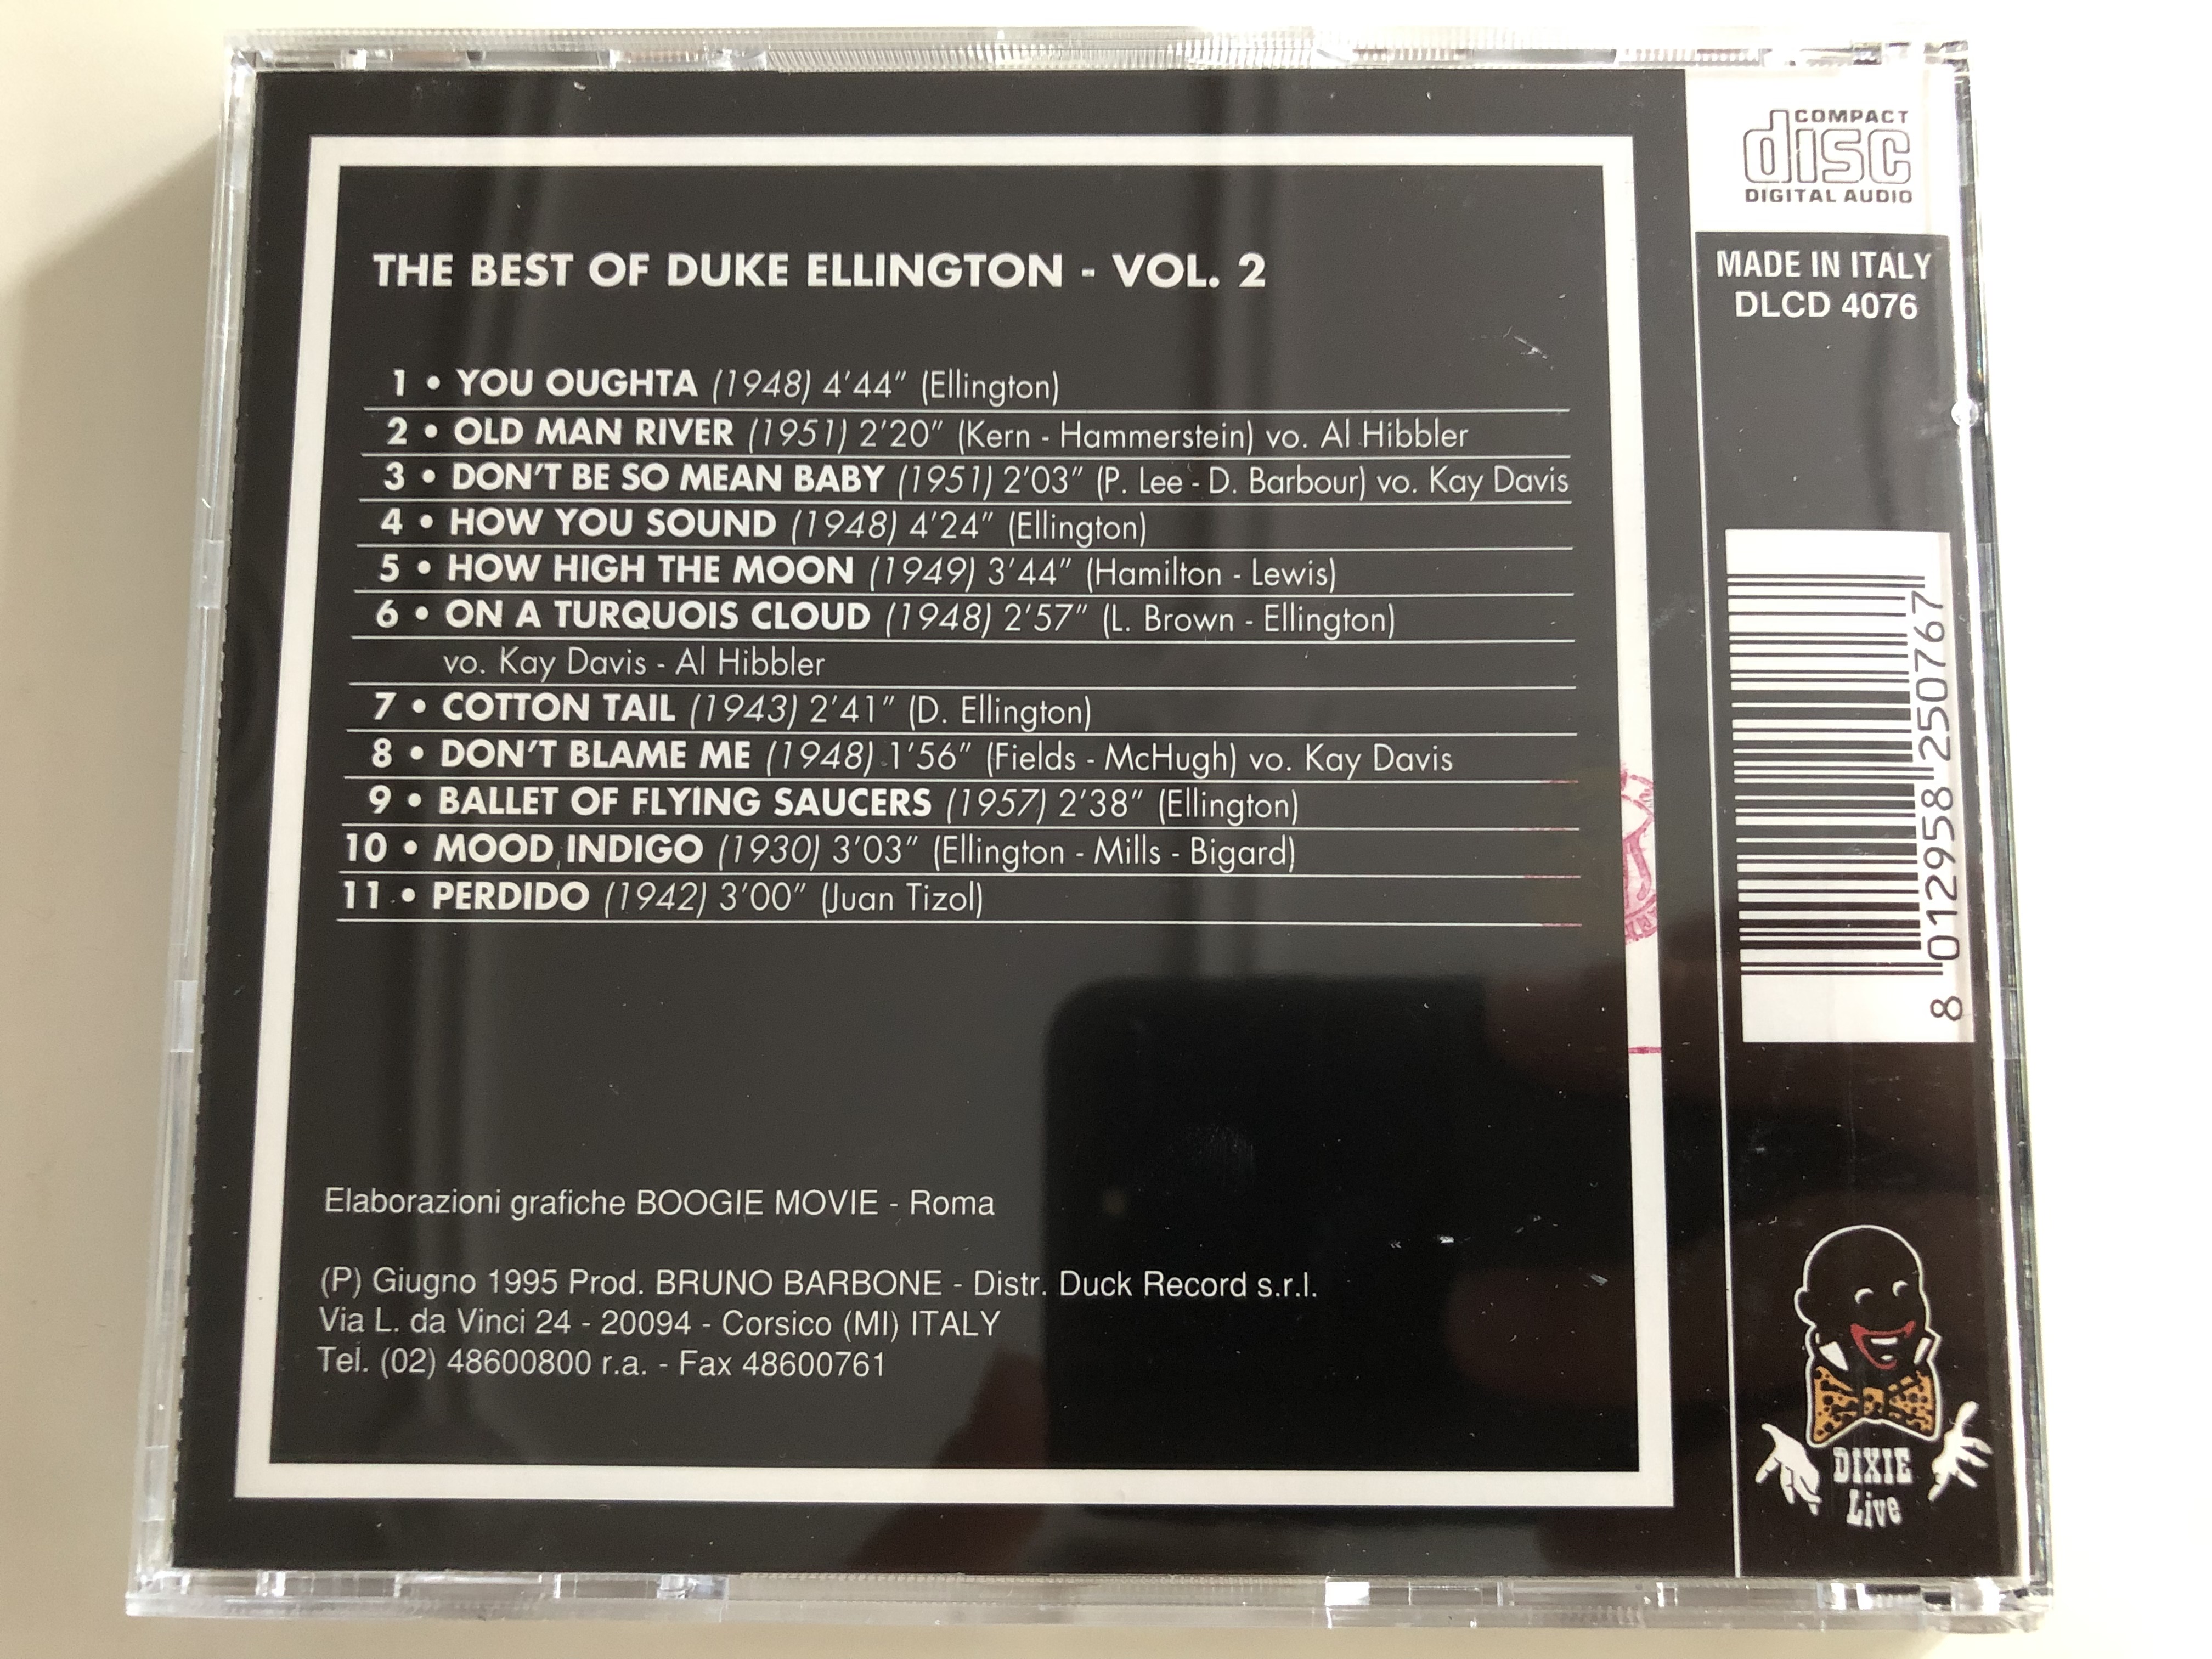 the-best-of-duke-ellington-vol-2.-you-oughta-old-man-river-how-high-the-moon-mood-indigo-perdido-audio-cd-1995-dlcd-4076-3-.jpg